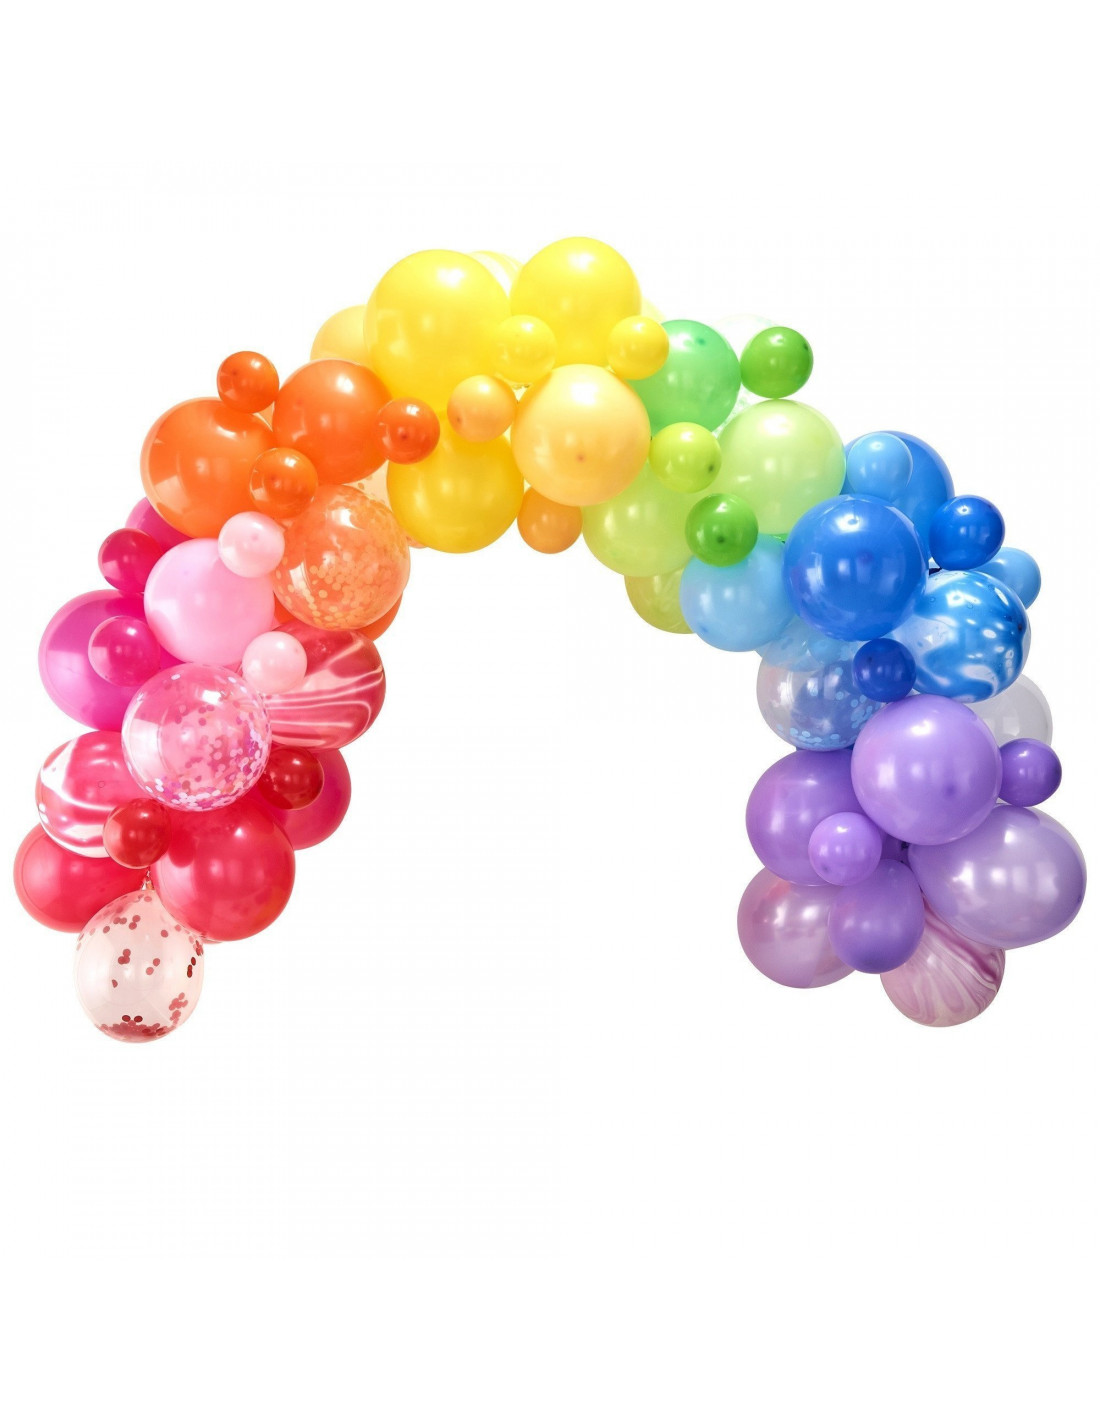 Kit arche ballons iridescent SG-104 : Art & Festif : Articles de